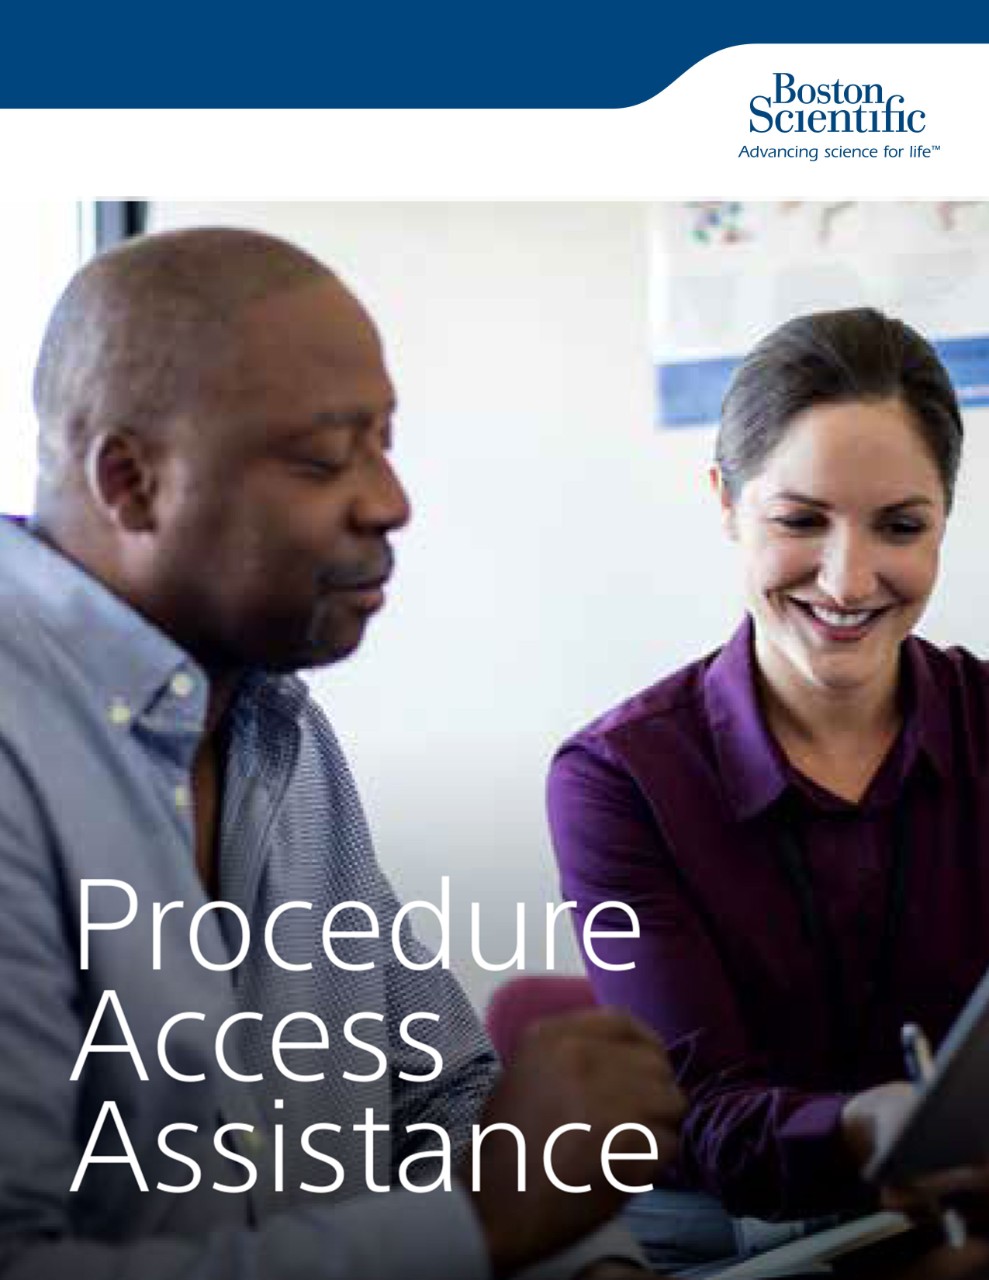 Patient Procedure Access Brochure for Prosthetic Urology